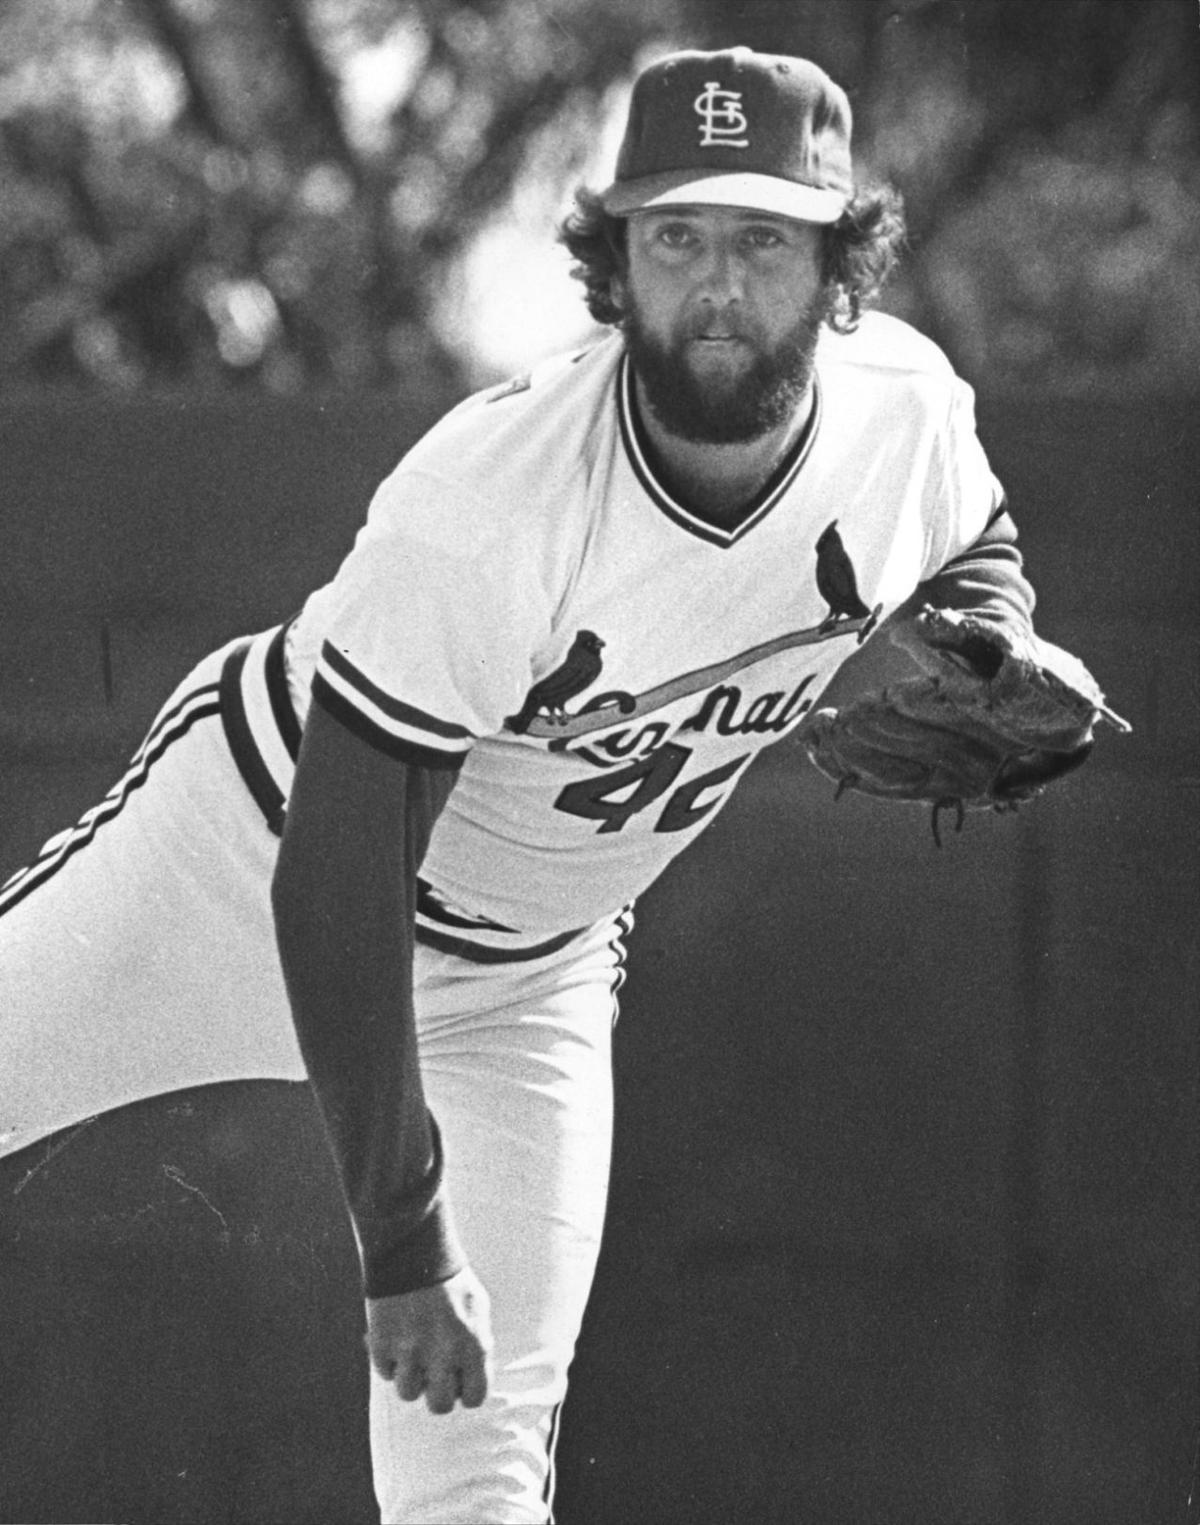 Atlanta Braves Photo (1980) - Rick Camp wearing the Atlanta Braves